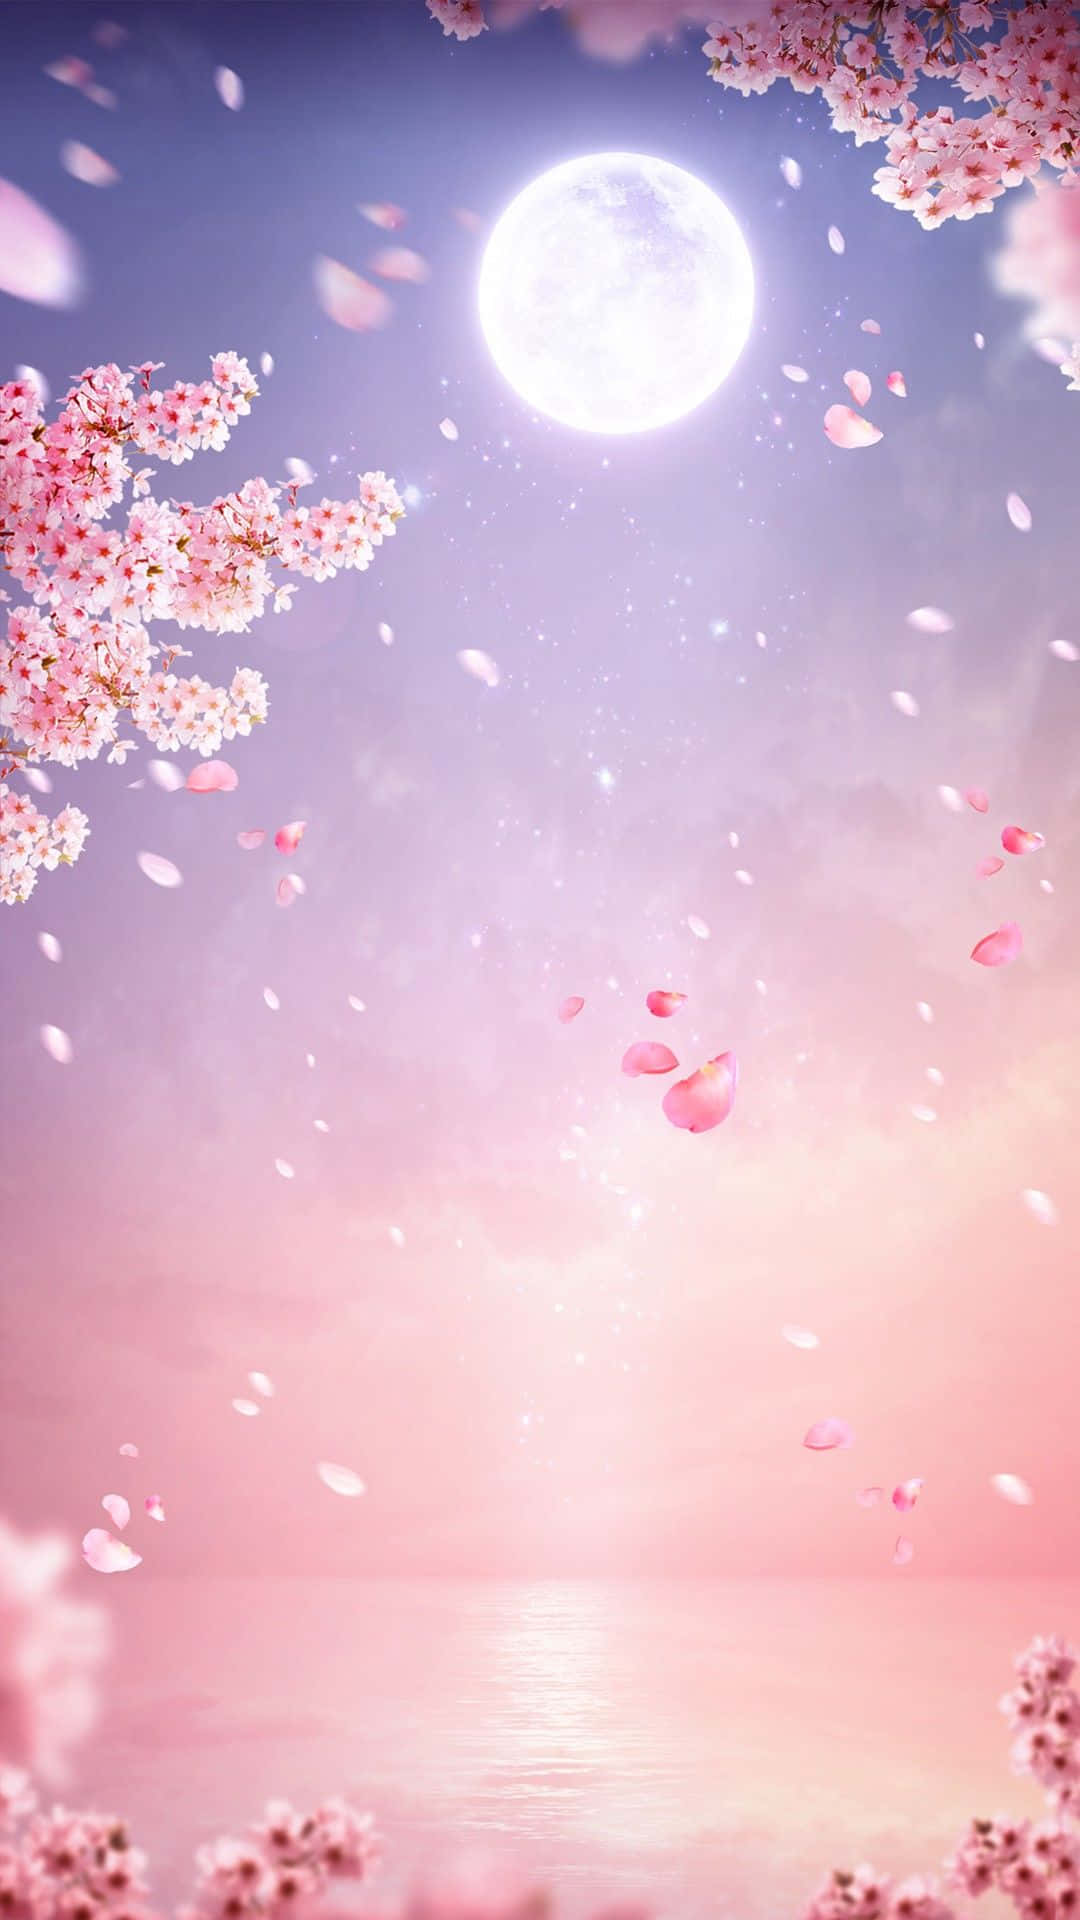 Moonlit Cherry Blossoms Over Water Wallpaper